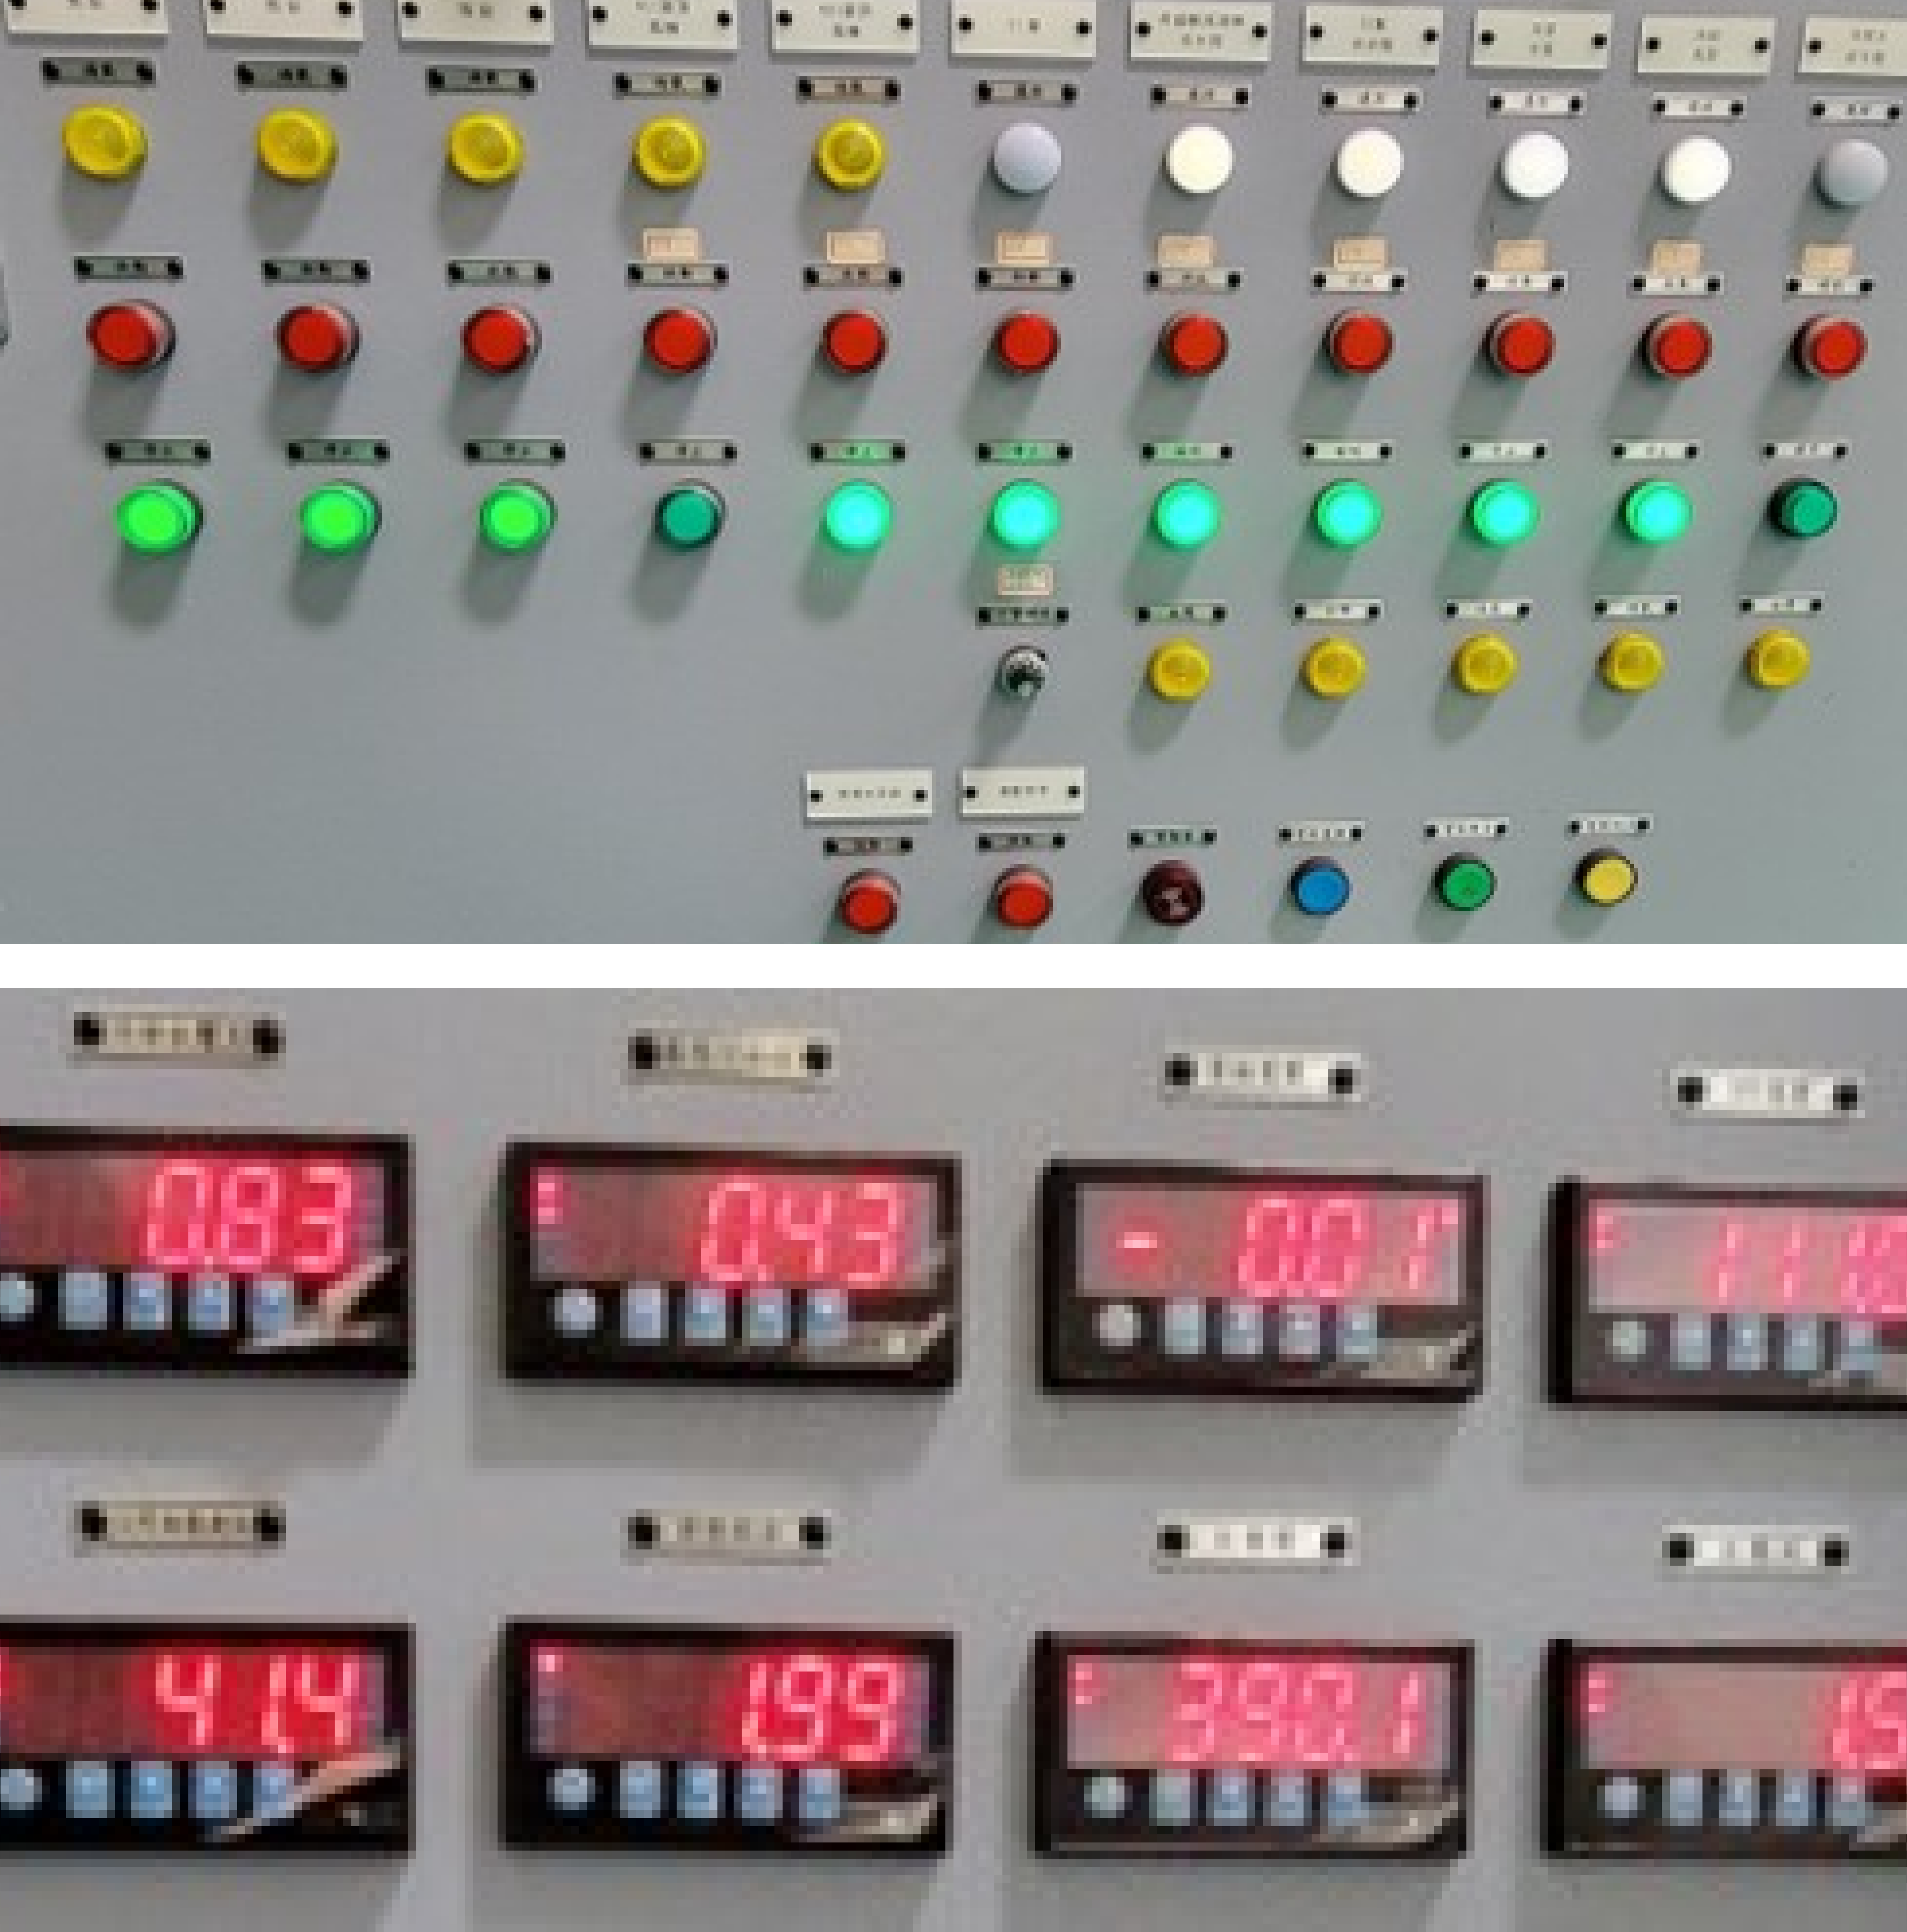 control panel showing lights and digital gauges